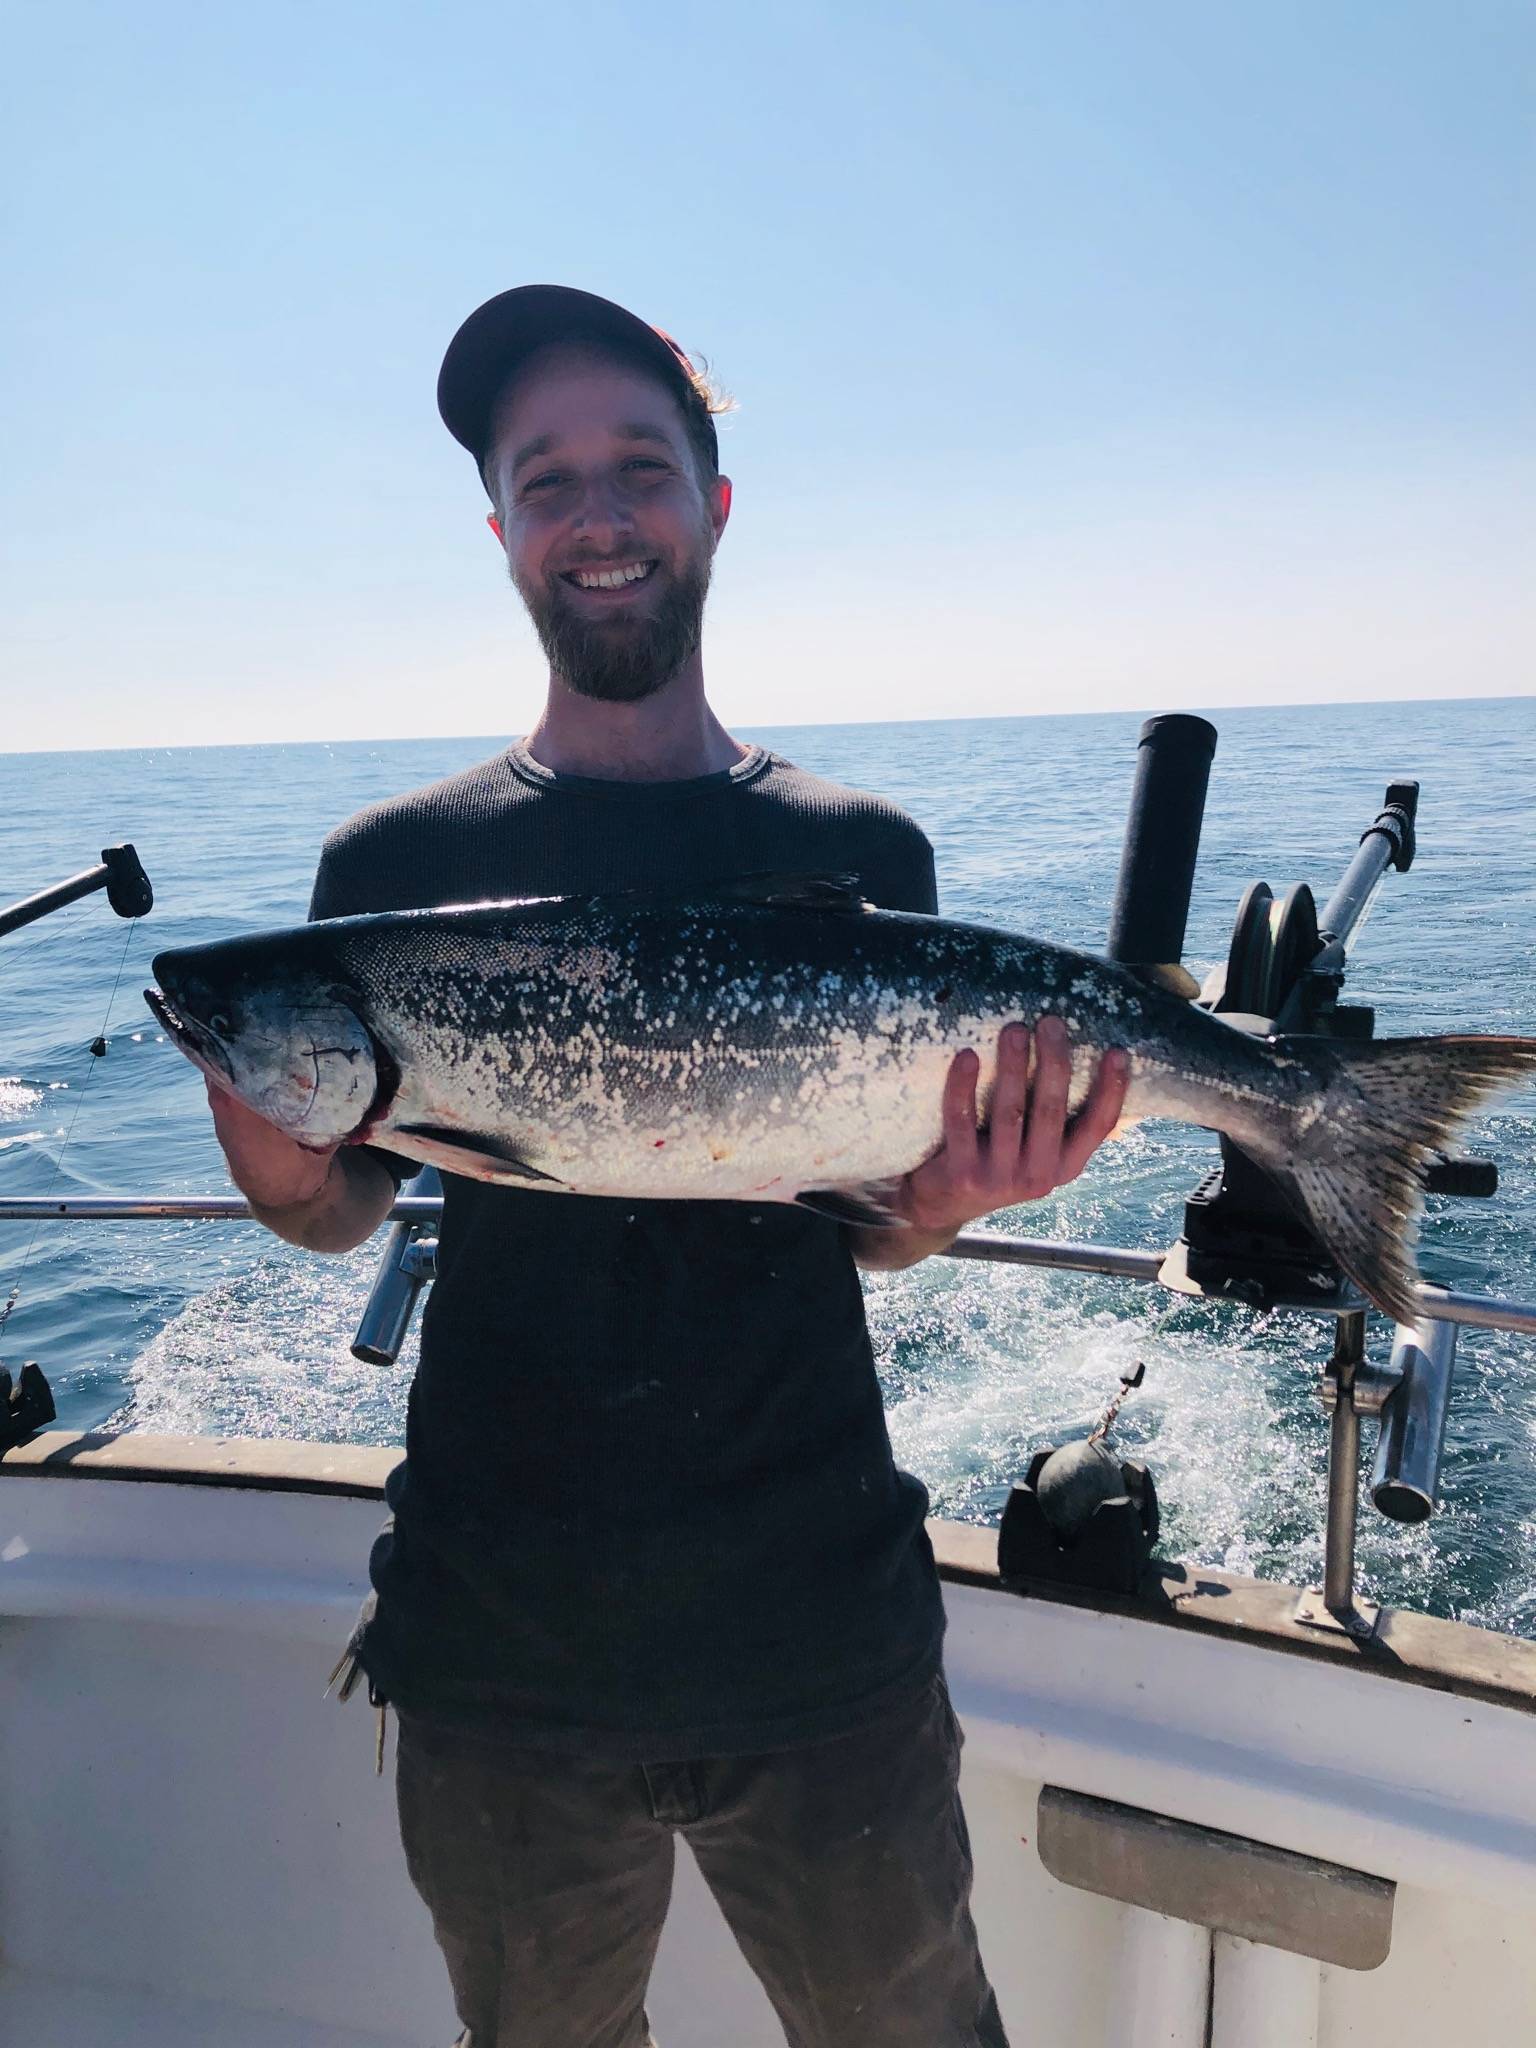 The author holds a king salmon caught on Aug. 16, 2020 in Kachemak Bay near Homer, Alaska. (Photo courtesy Lizzie Byrne)